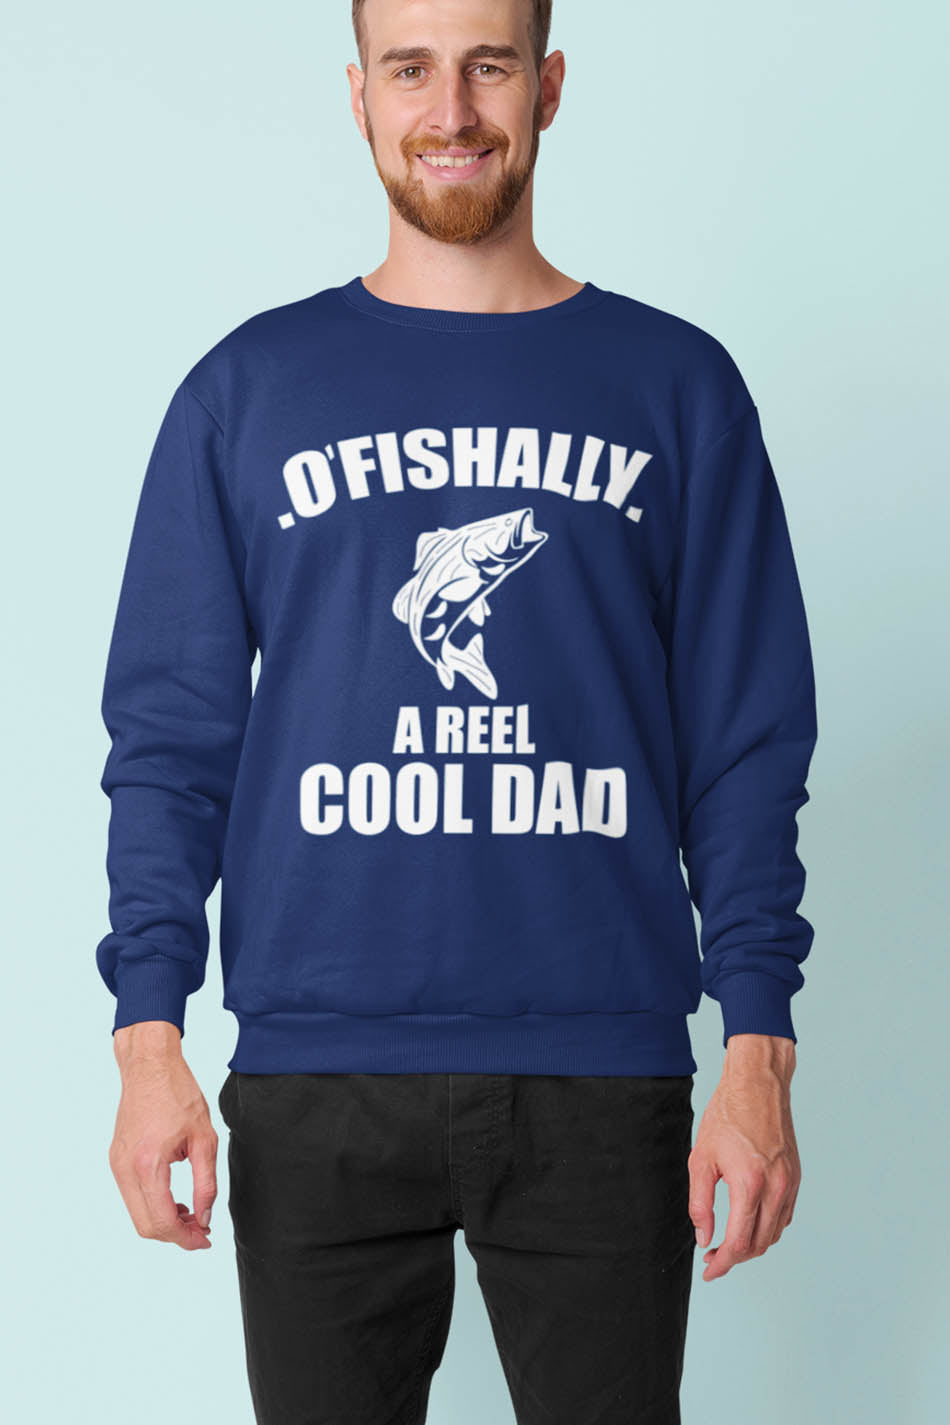 Ofishally A Reel Cool Dad Funny Fishing Lover Sweatshirt